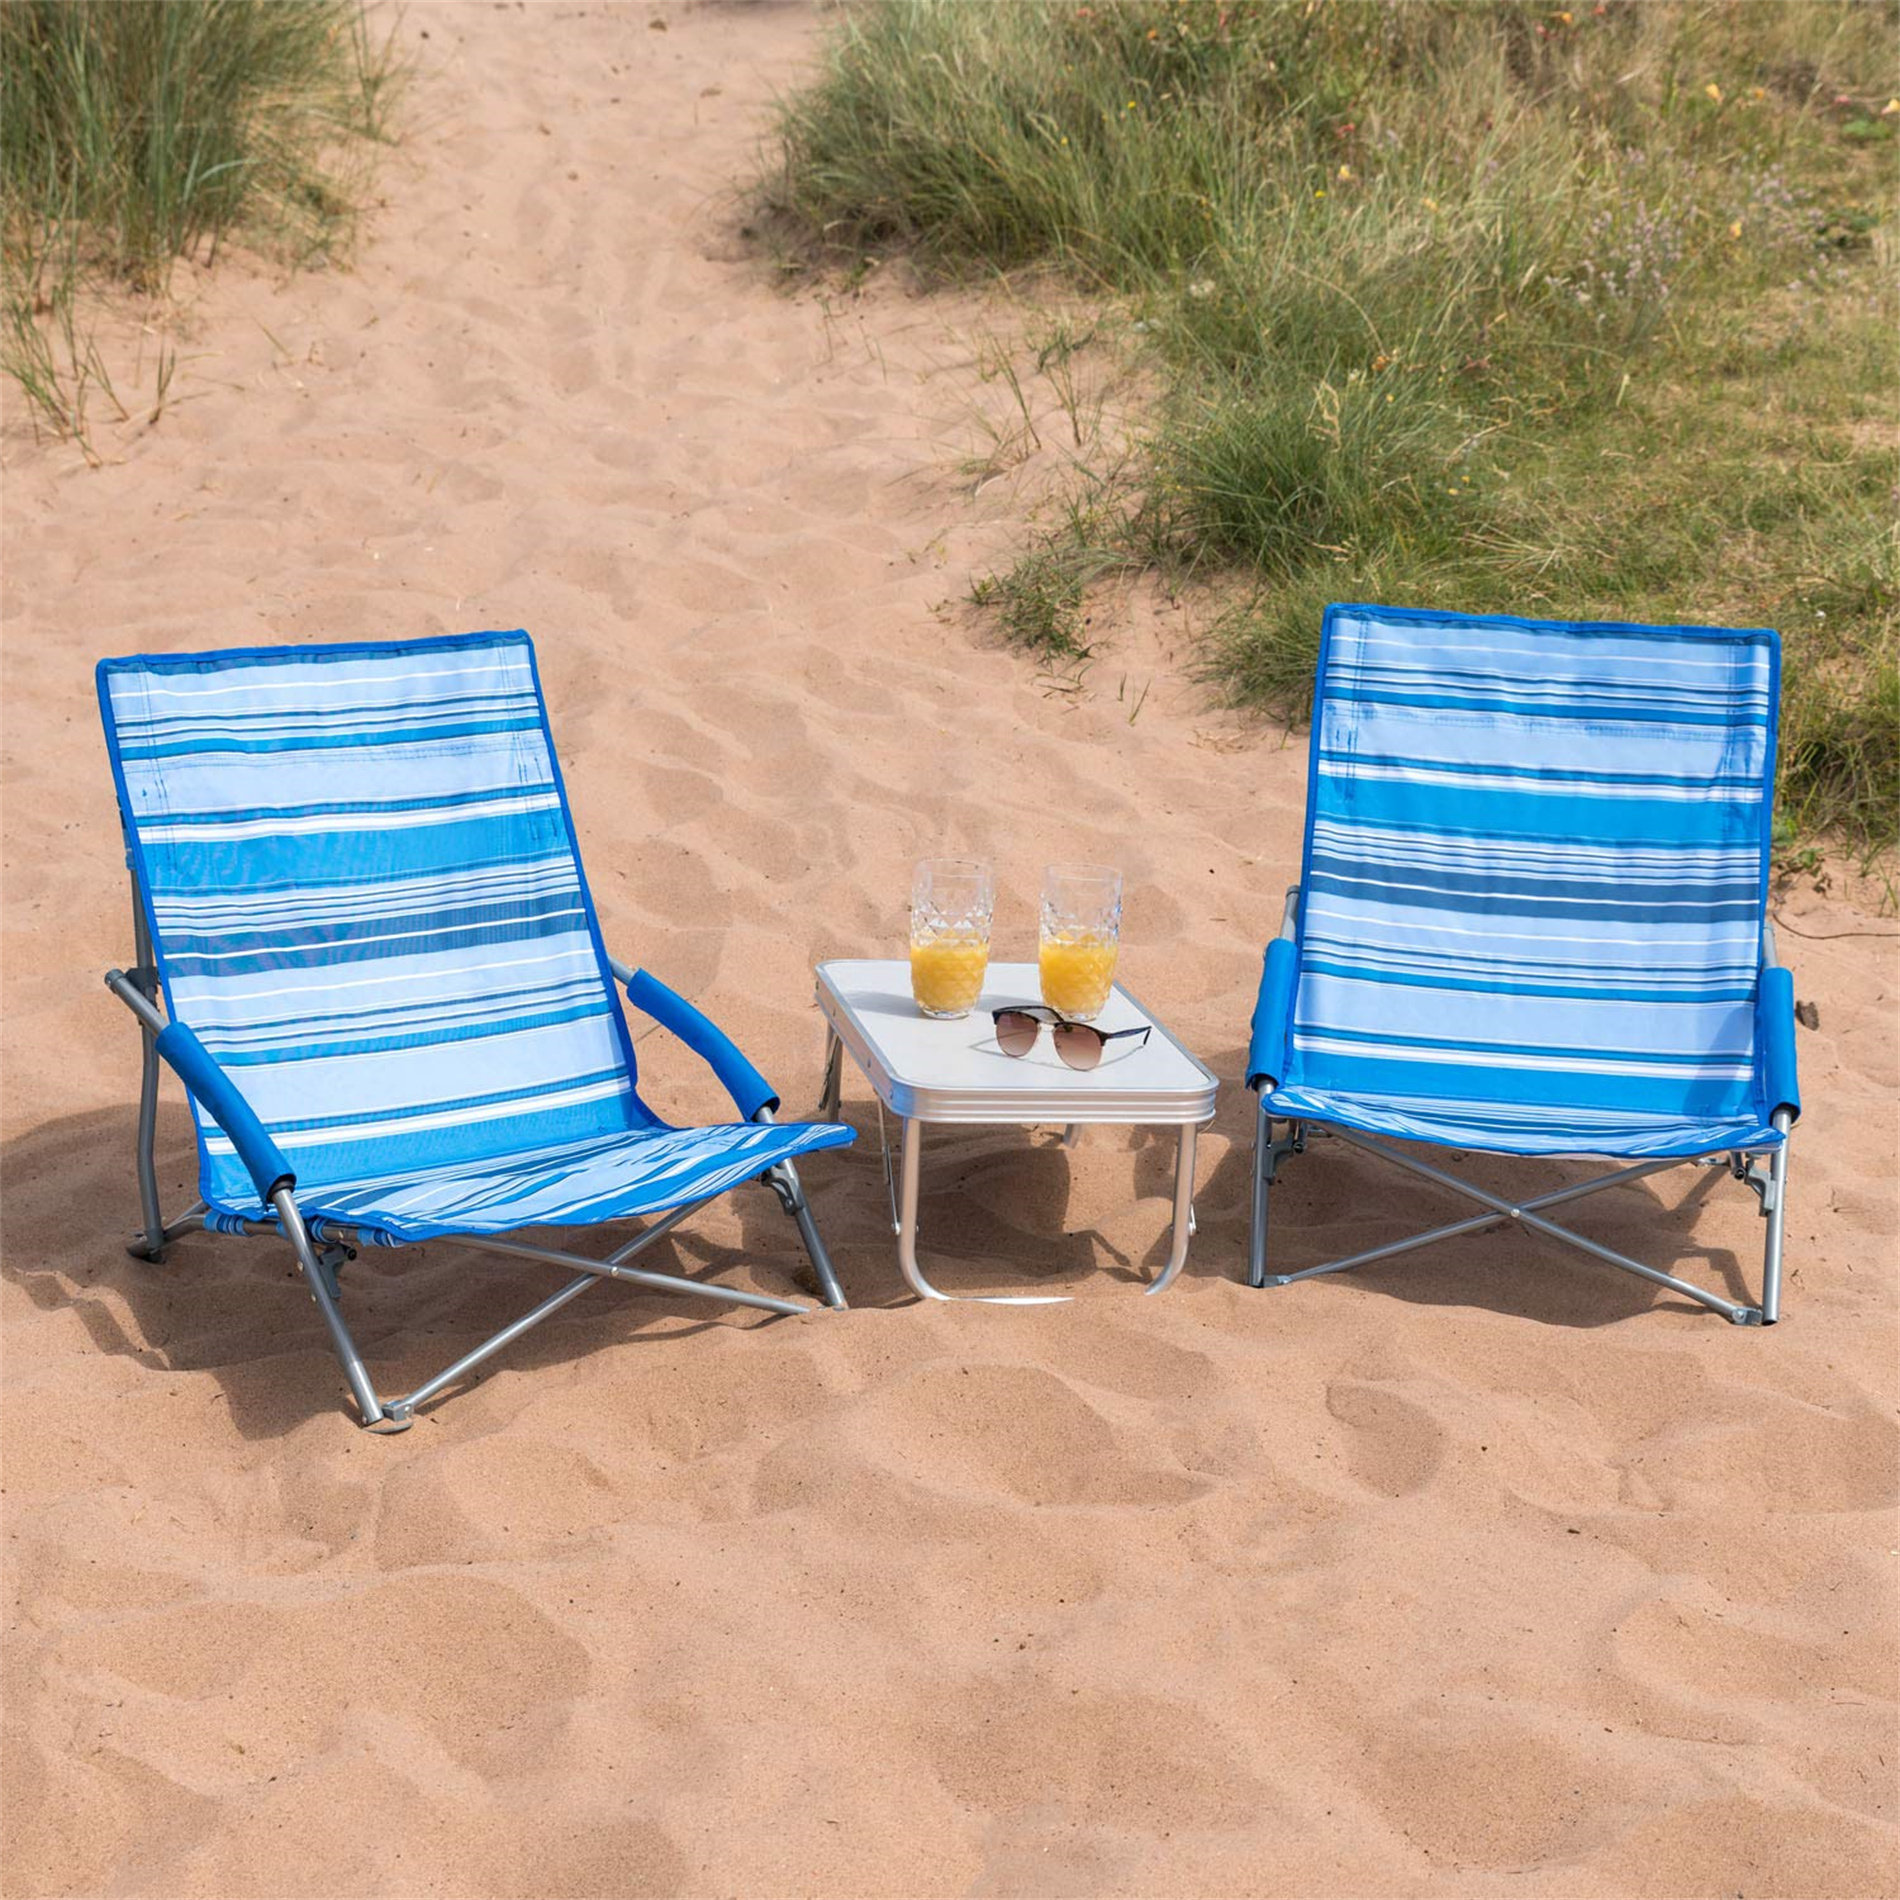 Draper Low Folding Beach Chair, Lightweight Portable Camping